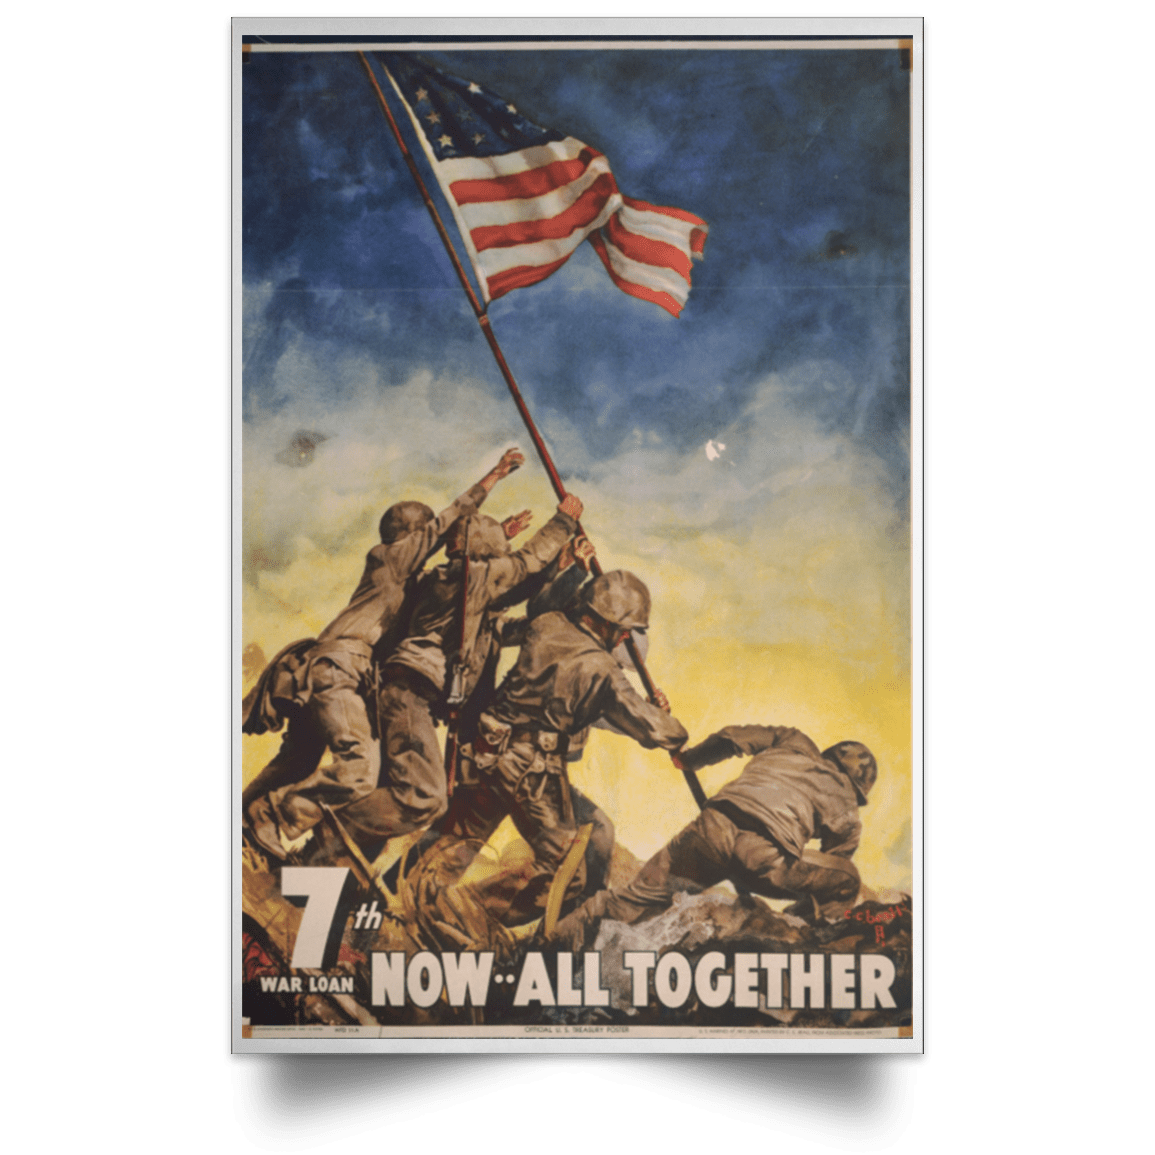 7th War Loan, Now… All Together – Vintage War Military Portrait Poster